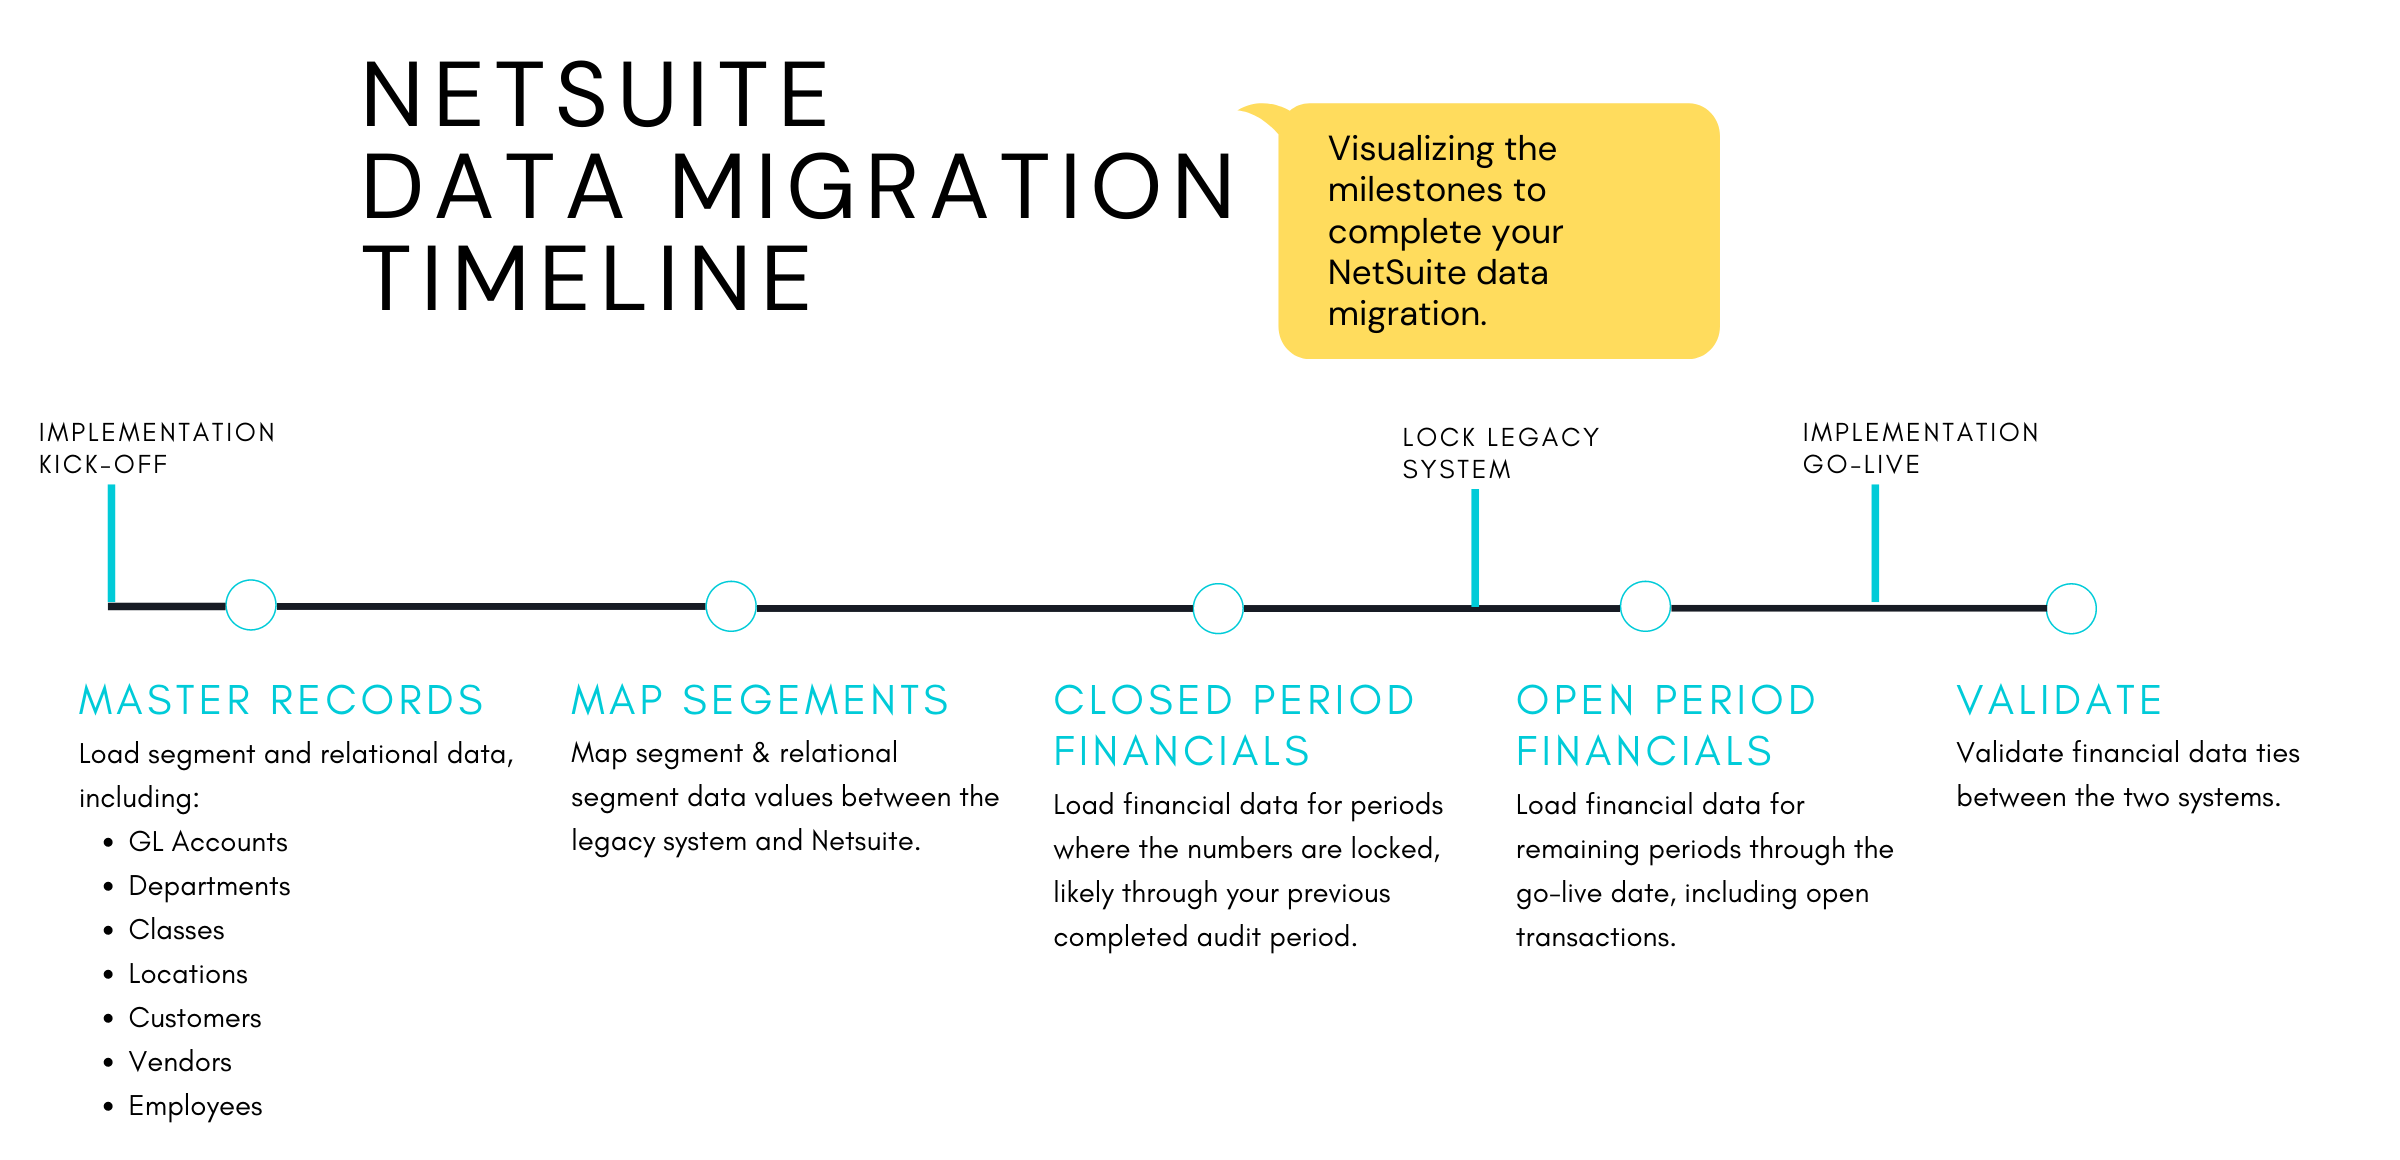 Netsuite-Data-Migration-Timeline